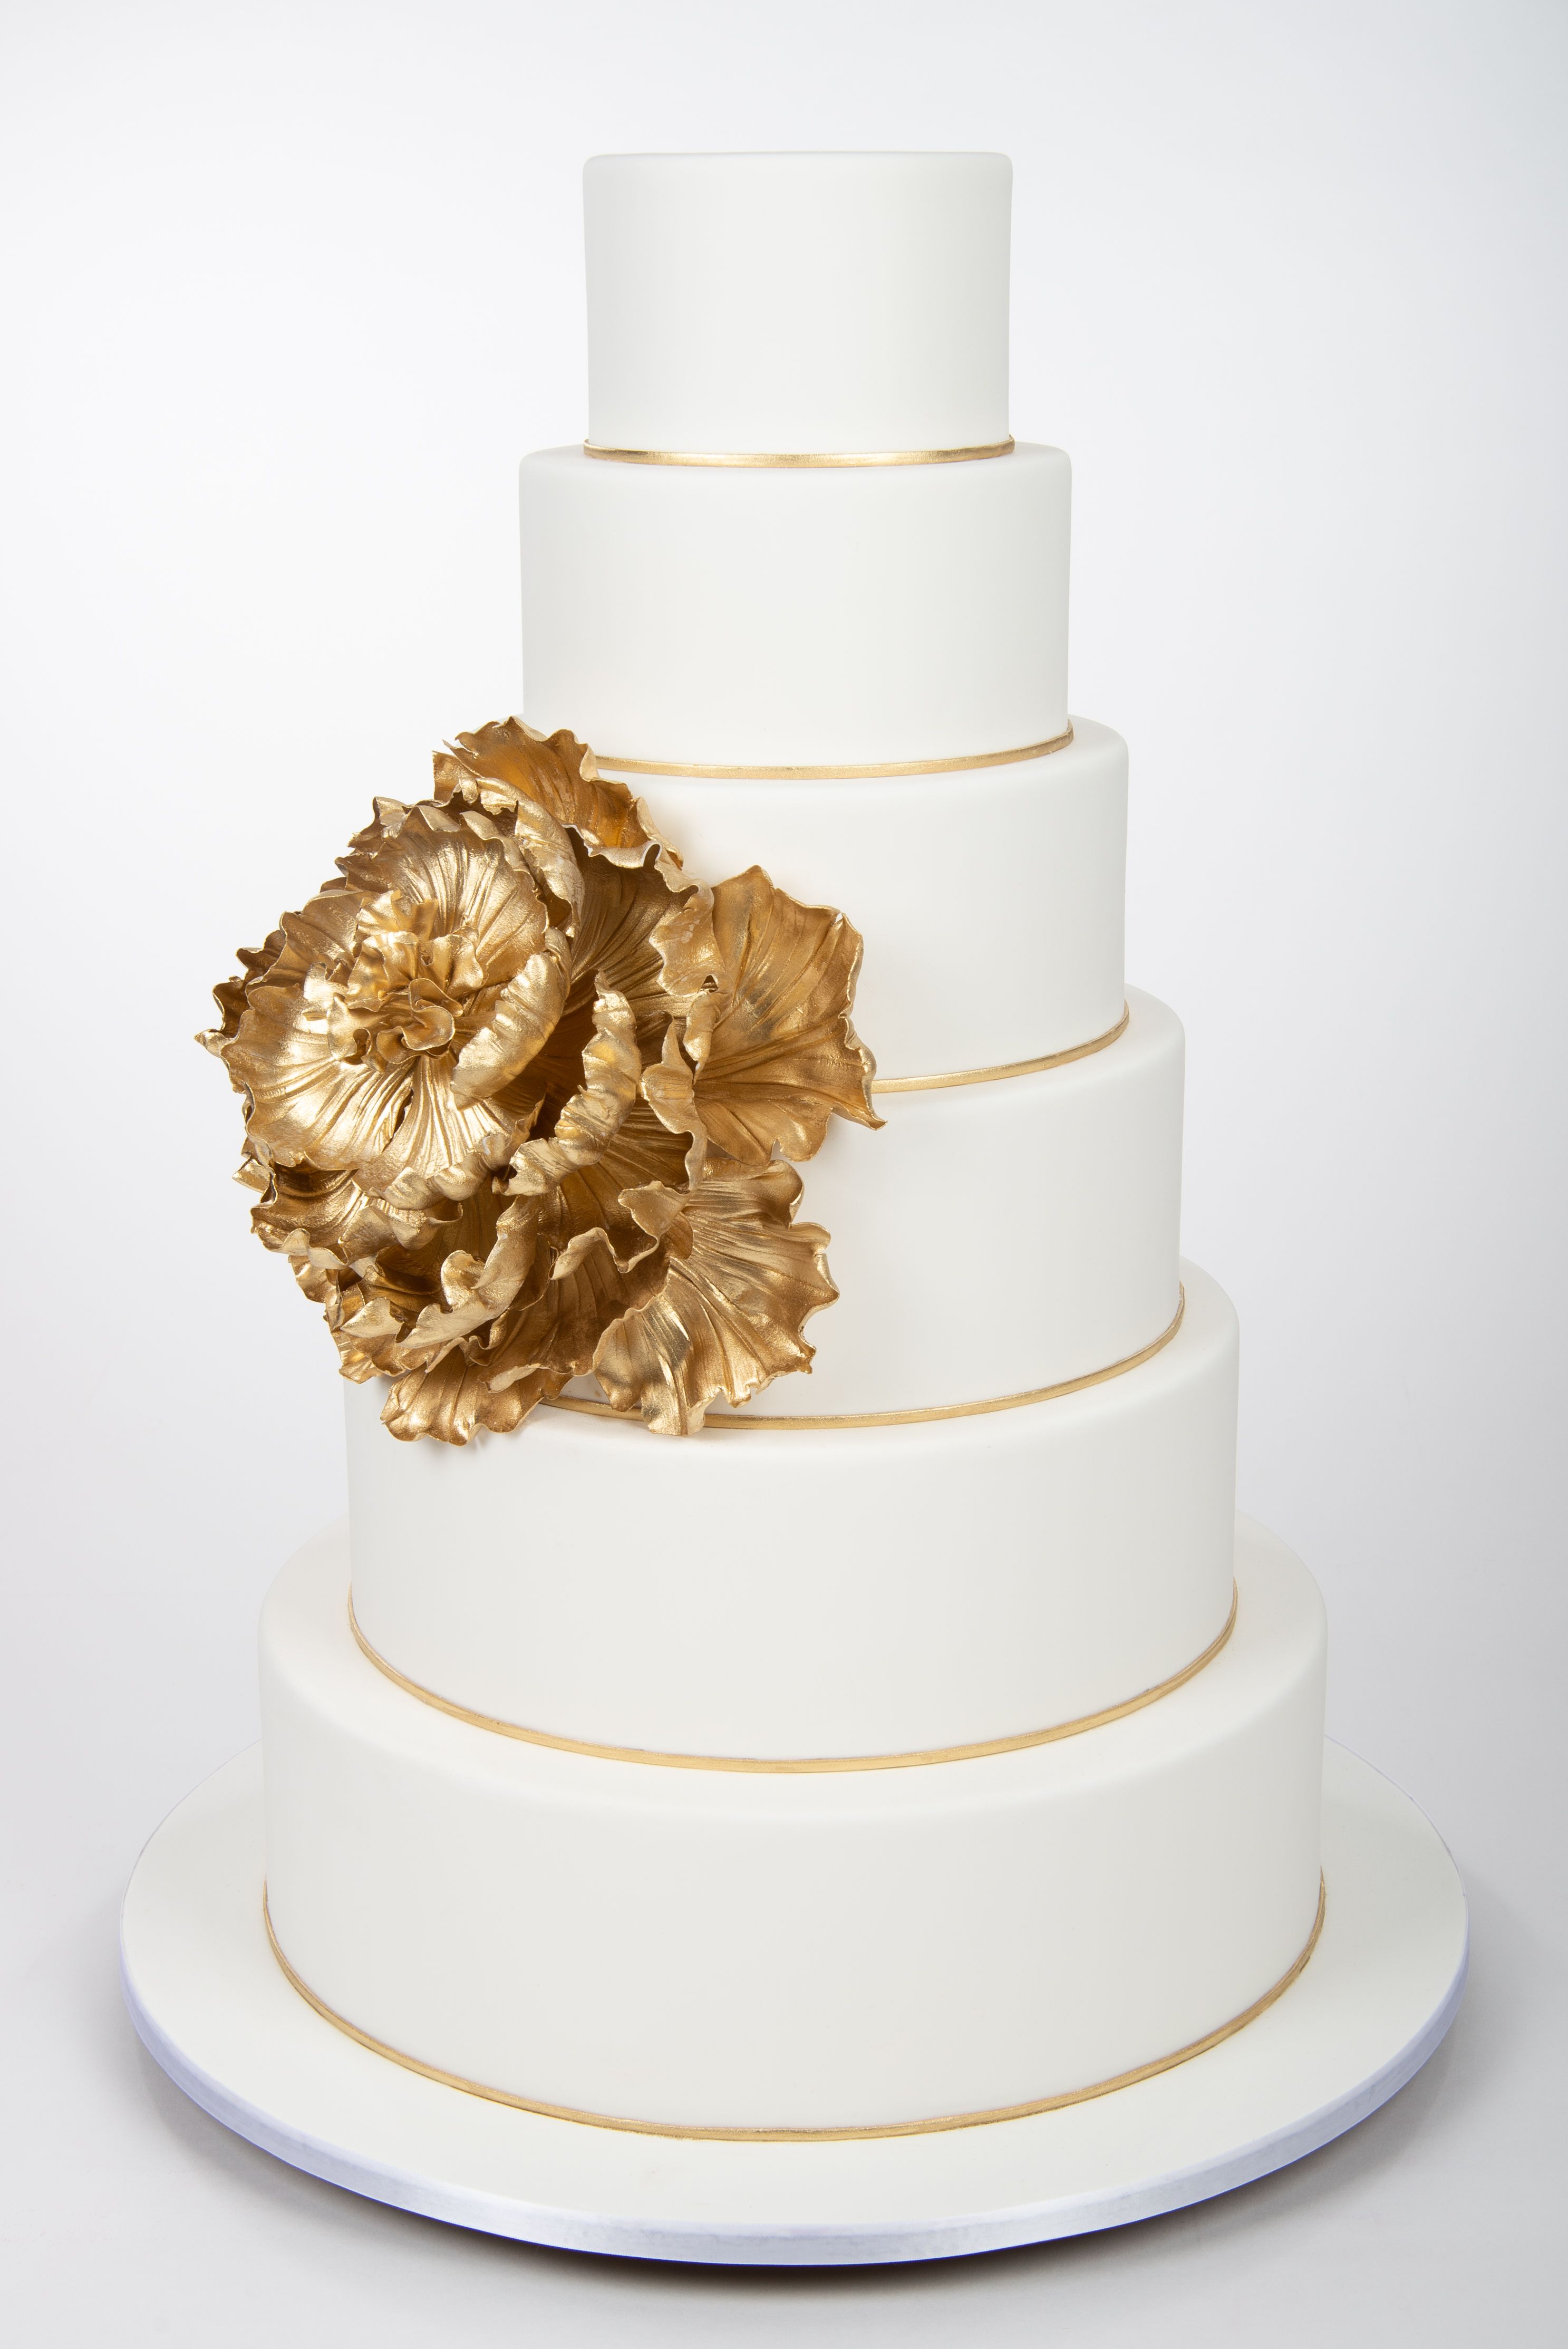 16 Wedding Cake Ideas for Your Big Day - Clean Origin Blog